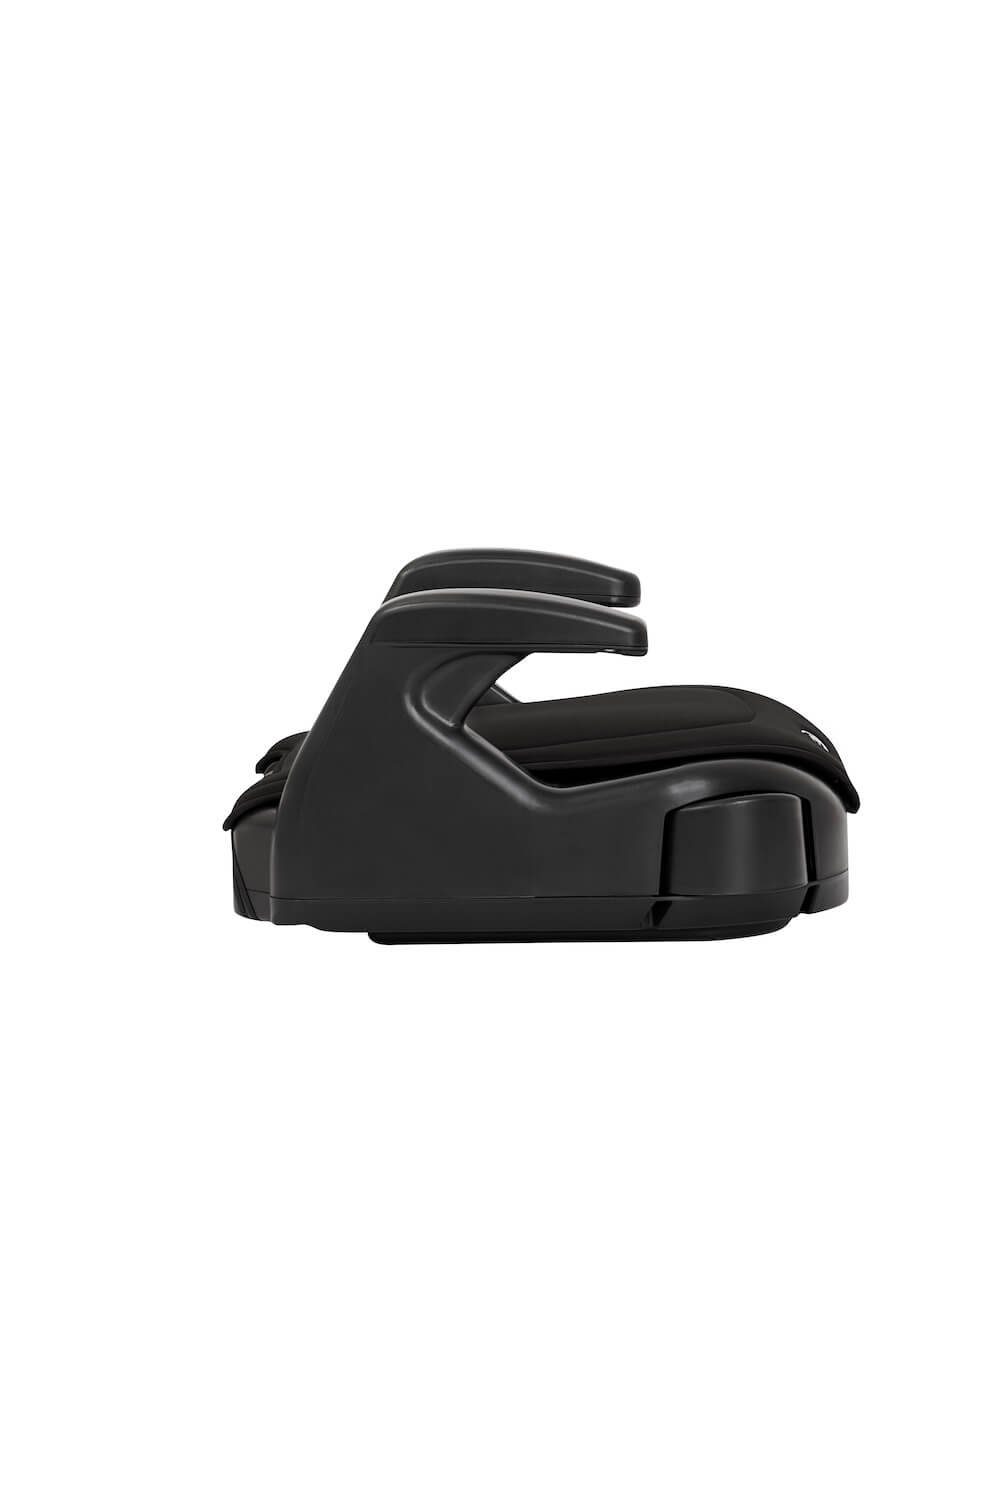 Graco Autokindersitz Graco - - Kindersitzerhöhung Black Booster Basic R129 Farbe